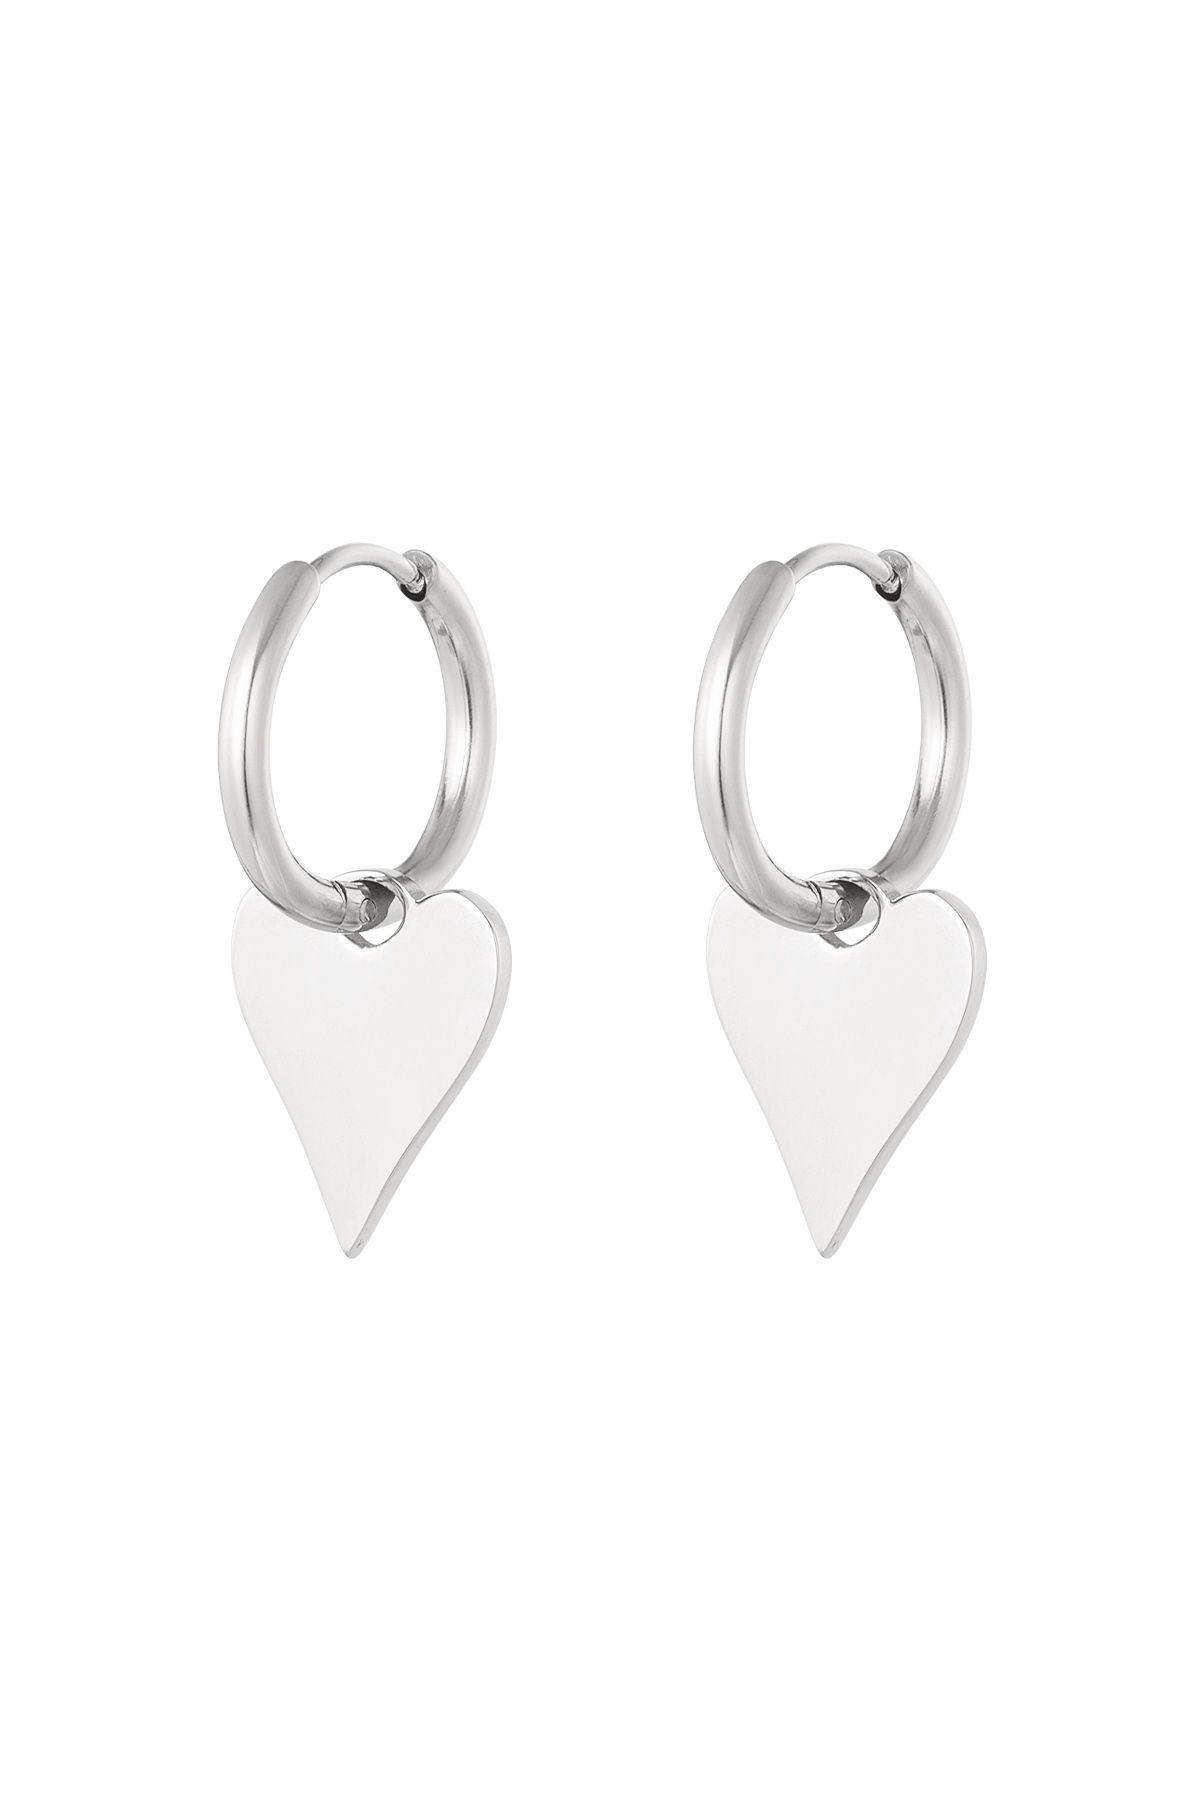 Earrings basic heart - silver h5 